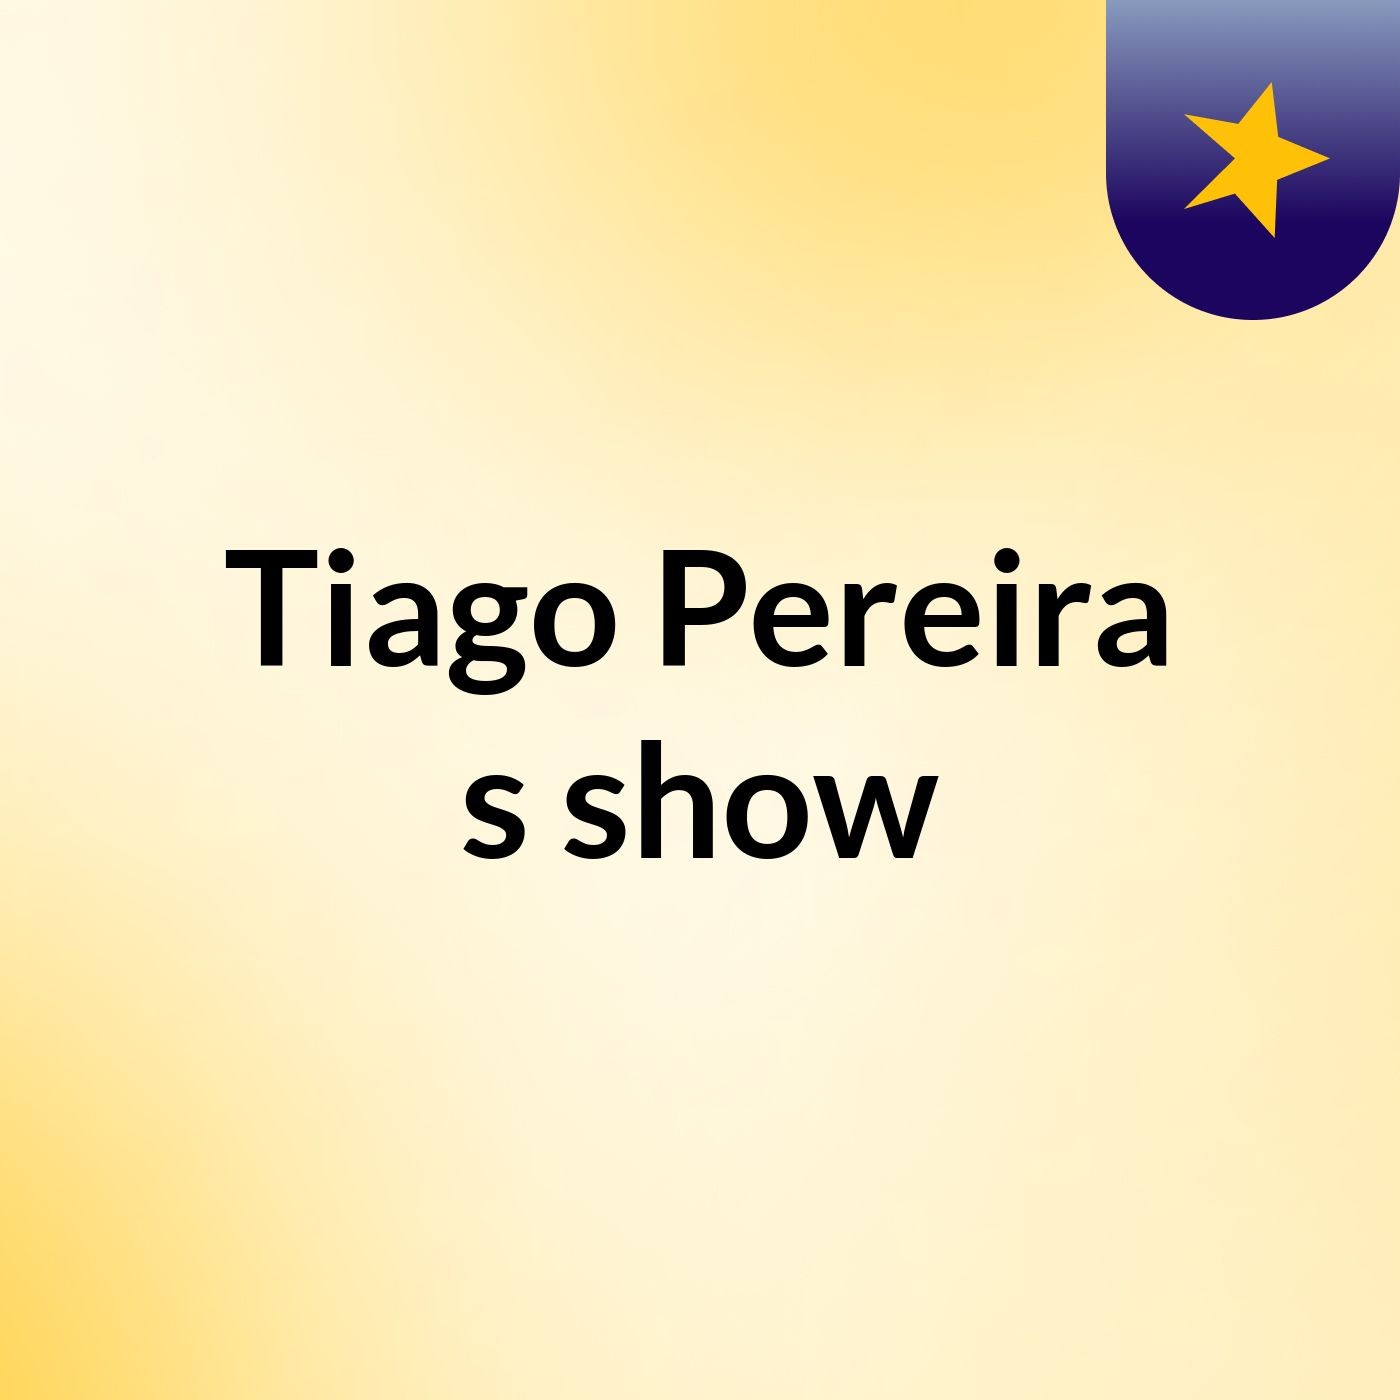 Tiago Pereira's show